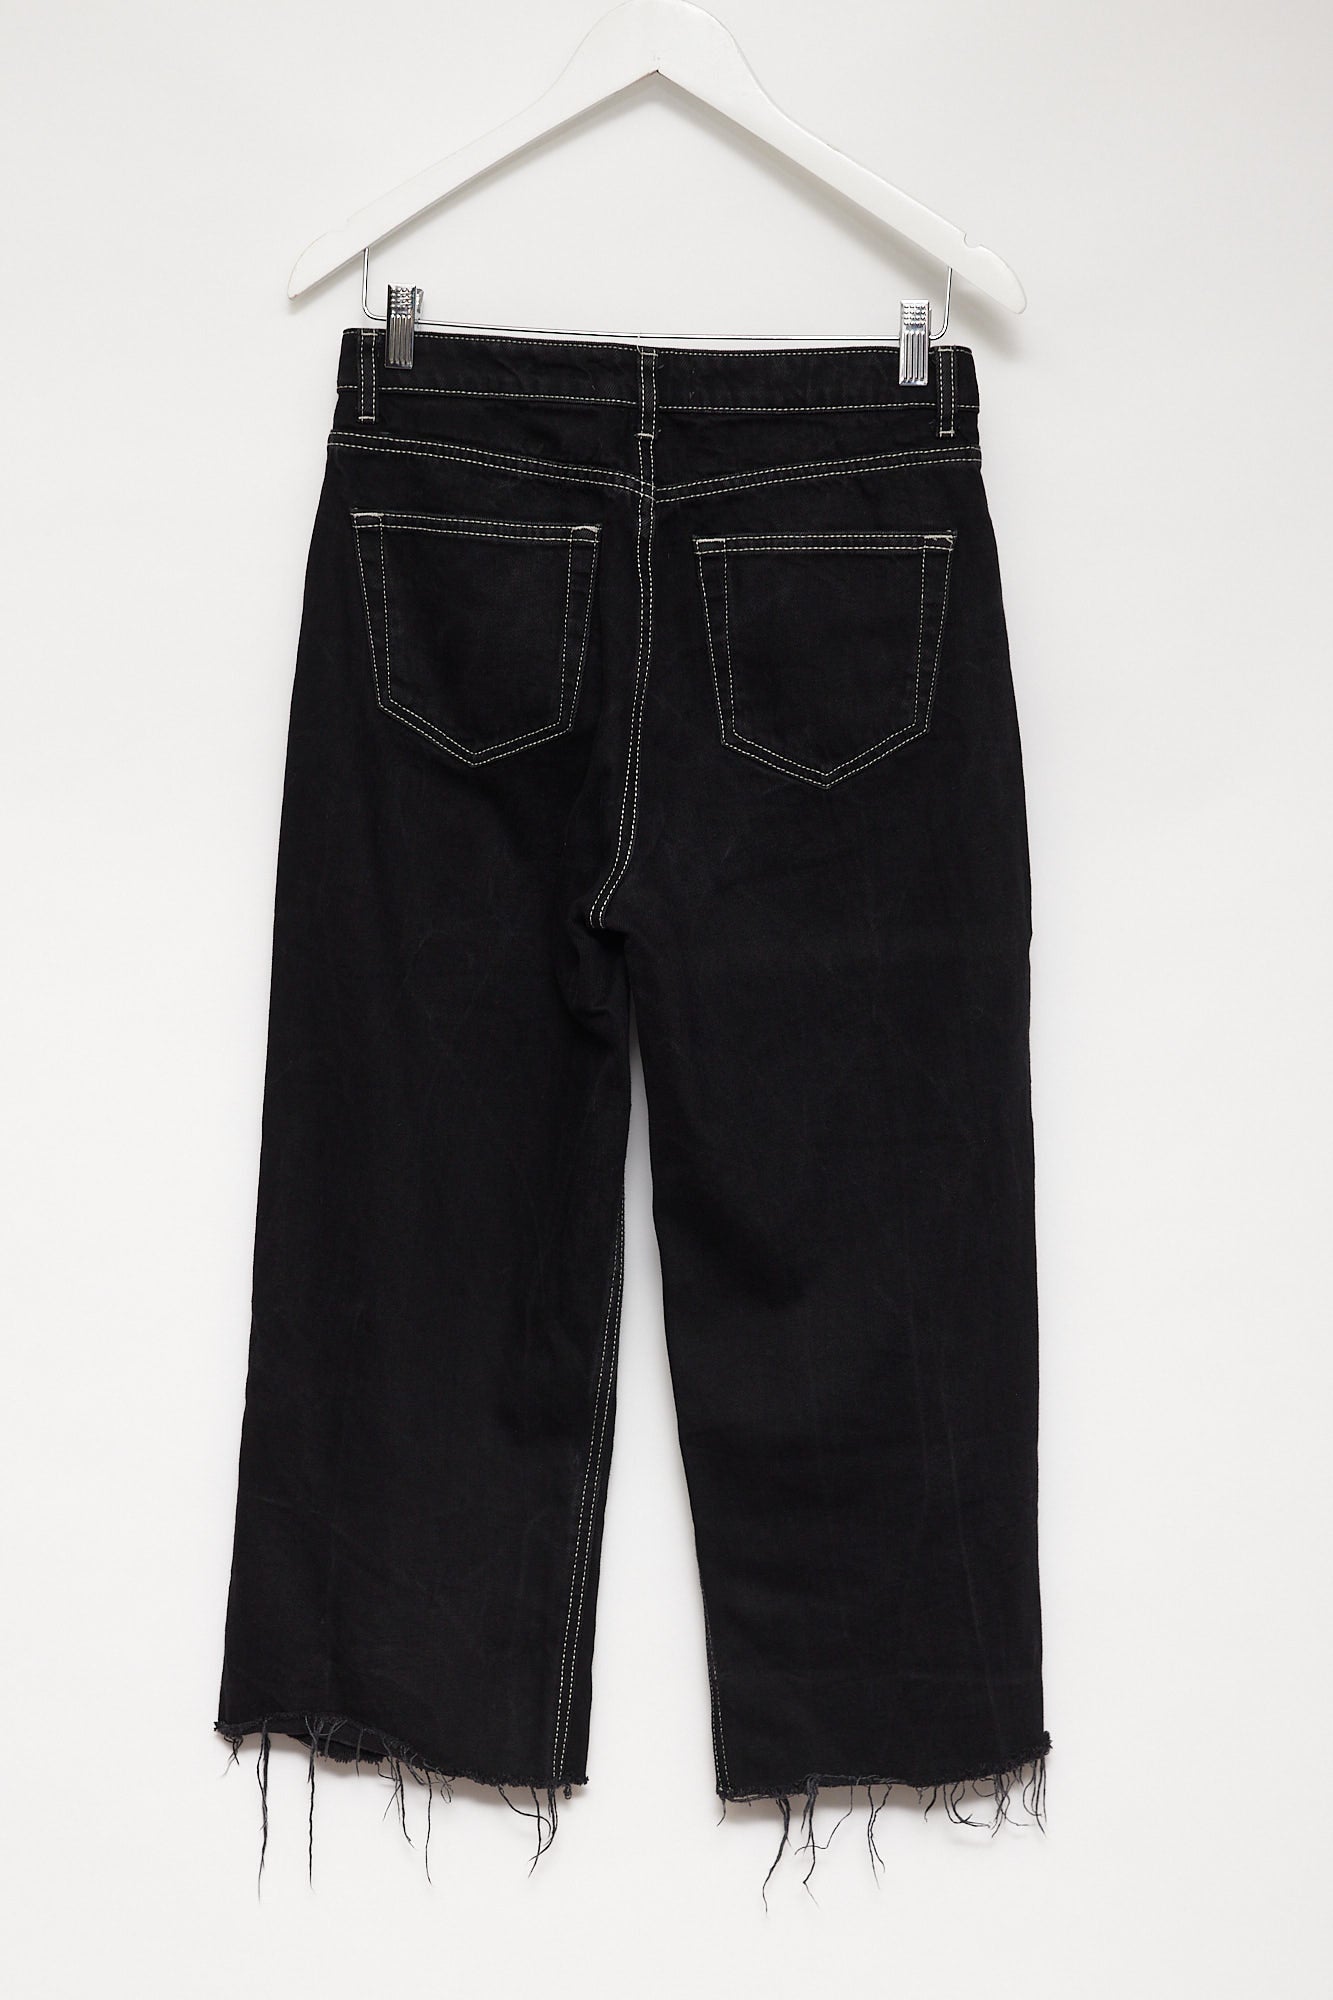 Womens Zara black cropped jeans size small